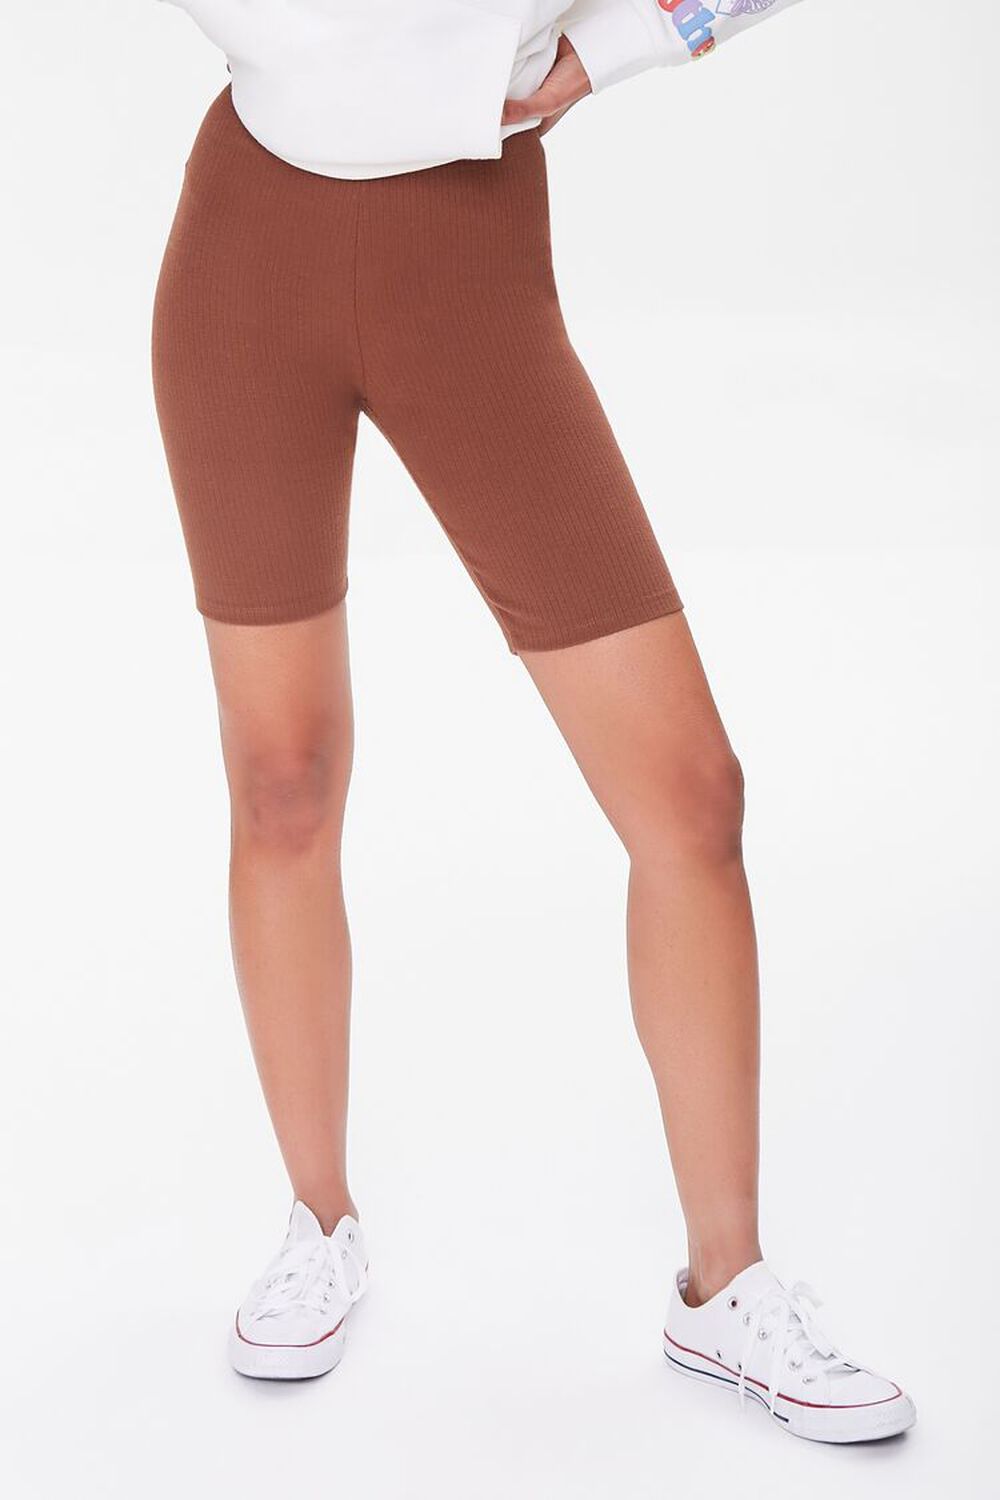 BROWN Cotton-Blend Biker Shorts, image 2